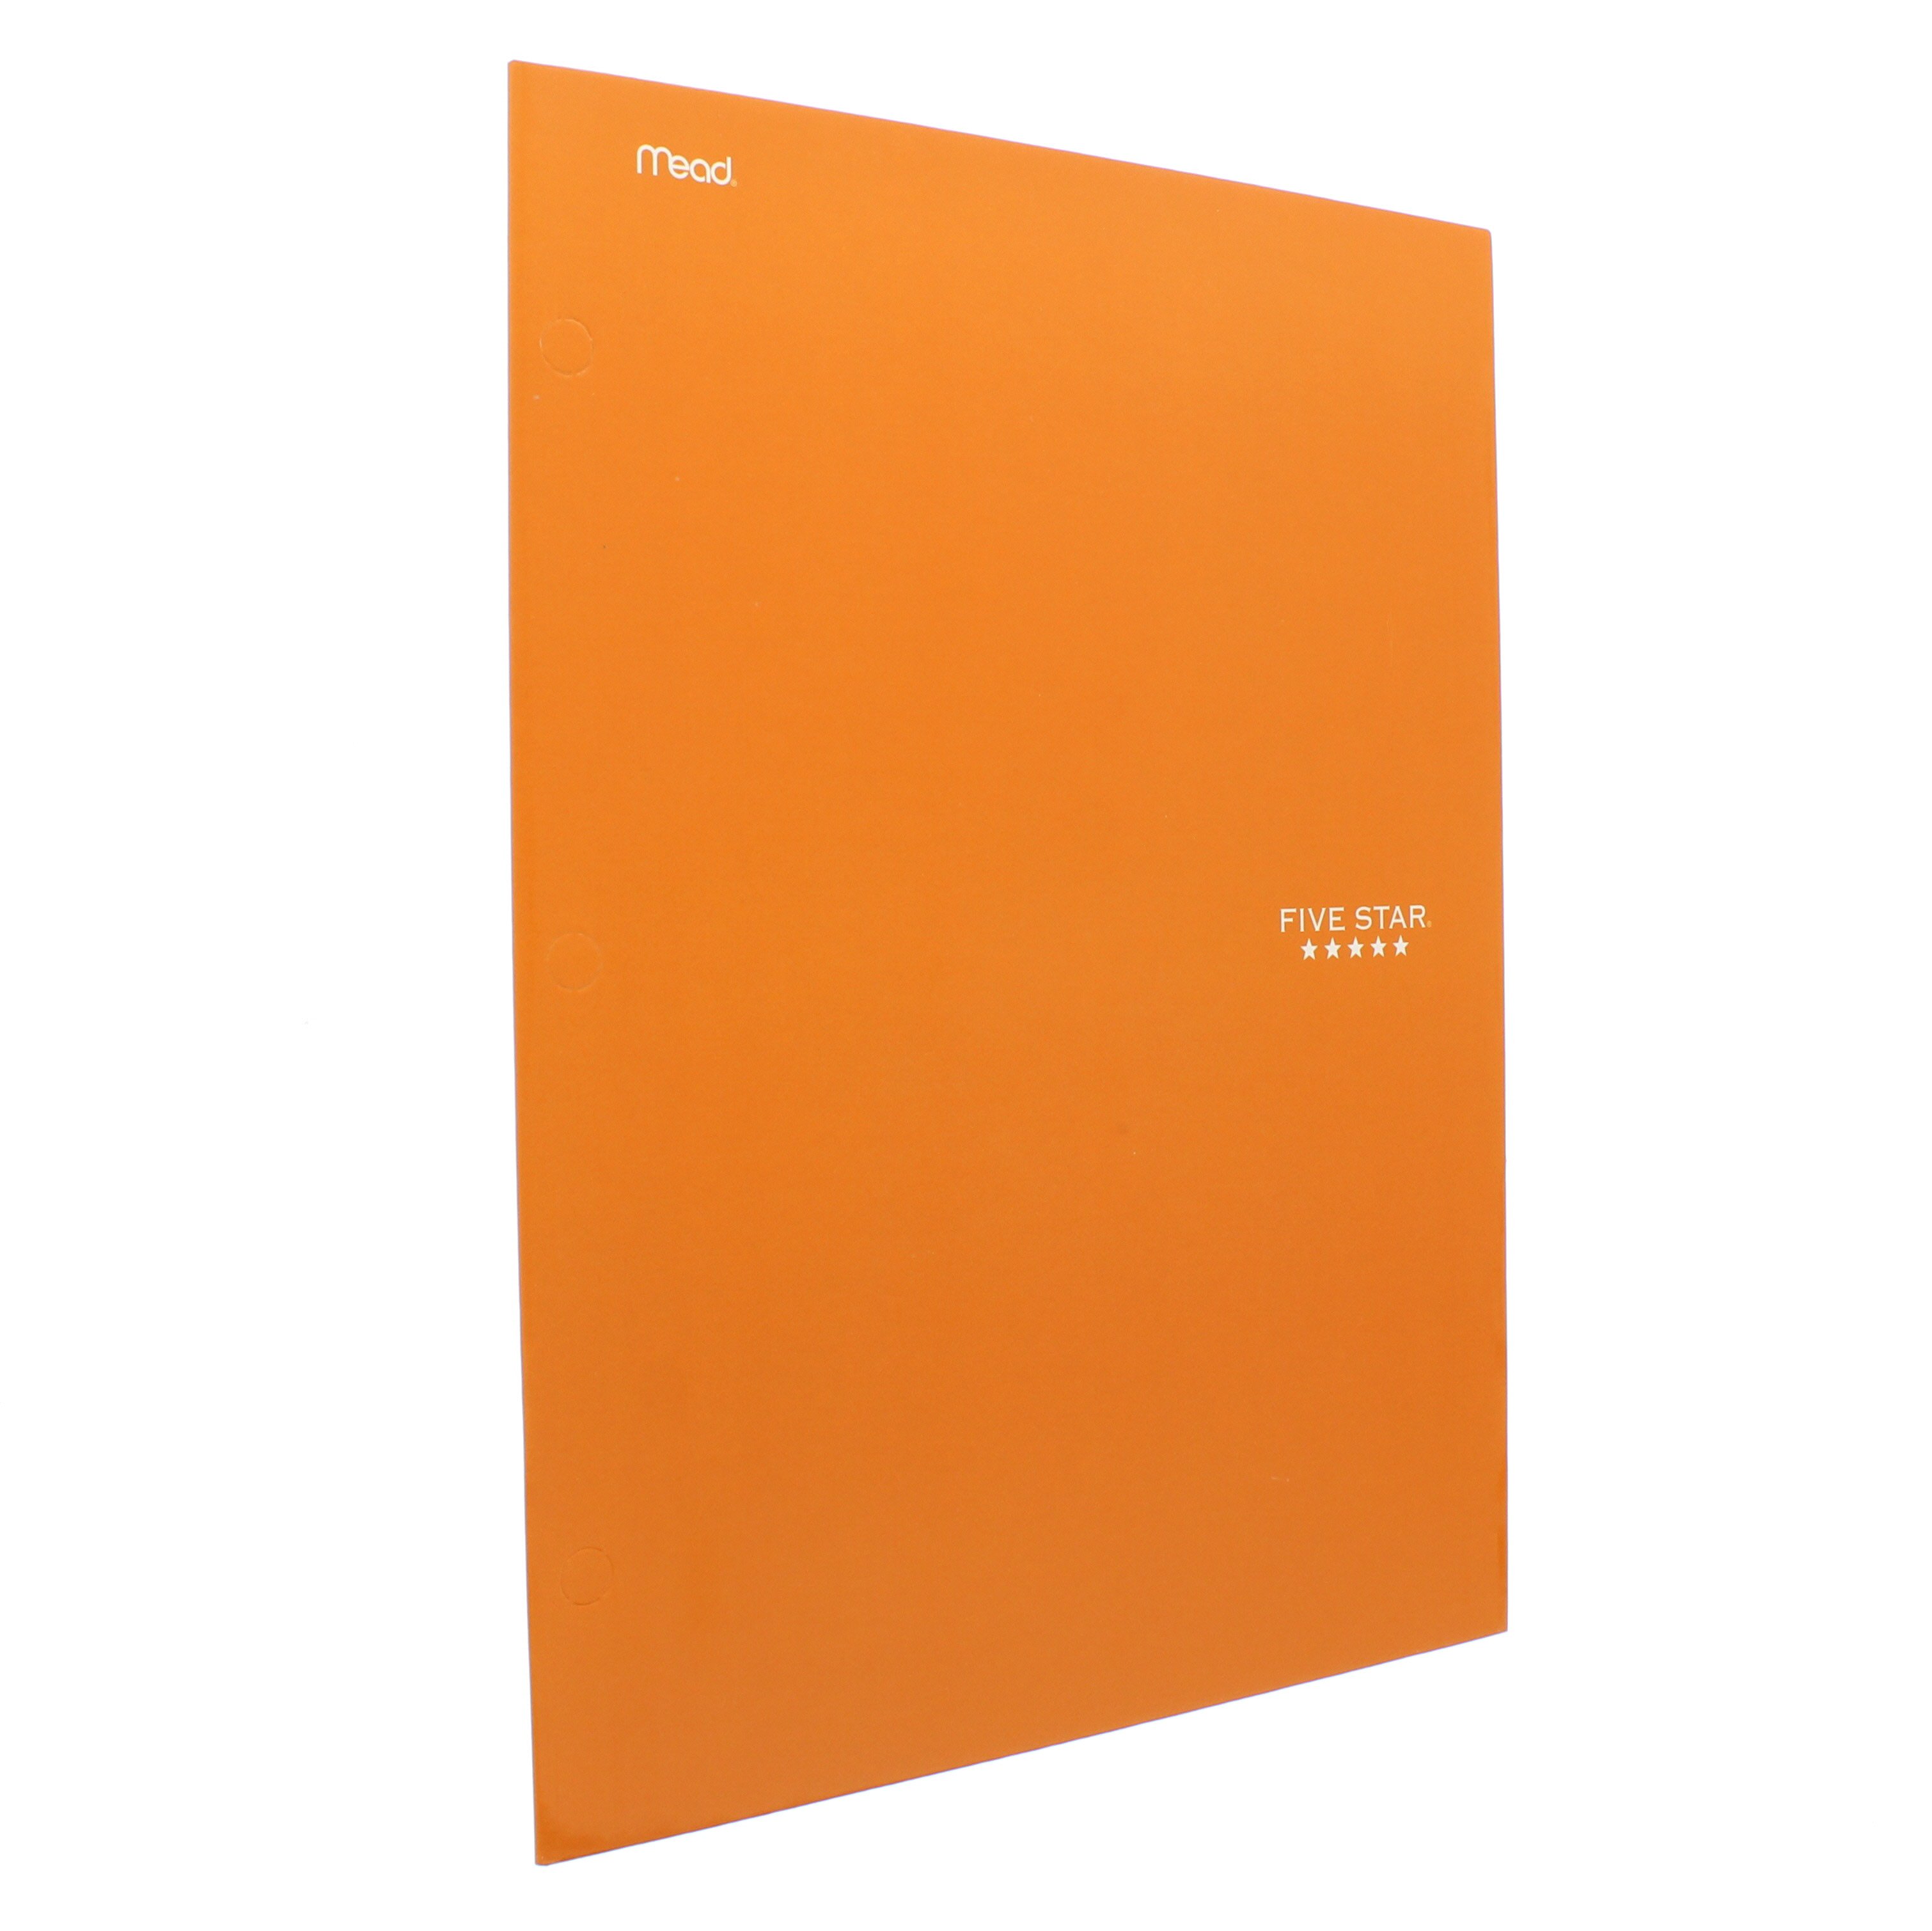 Mead Five Star 4 Pocket Paper Folder, Bright Orange - Shop Folders at H-E-B